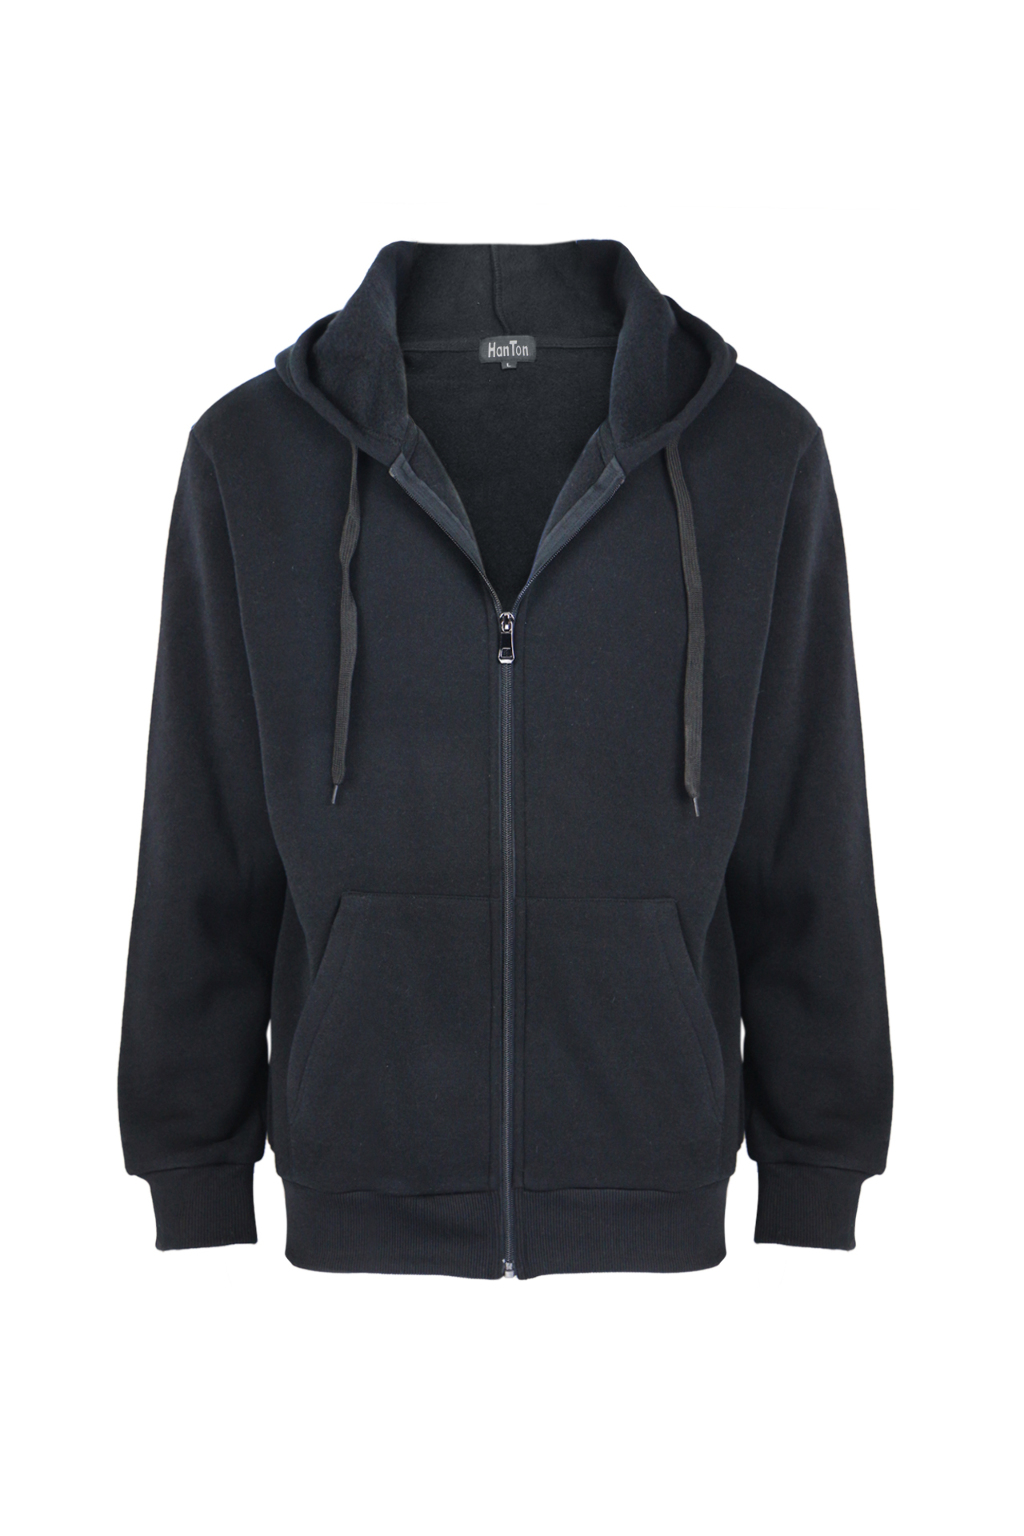 Wholesale Mens Black Jacket With Zipper-Black-XL (SKU 2323244) DollarDays